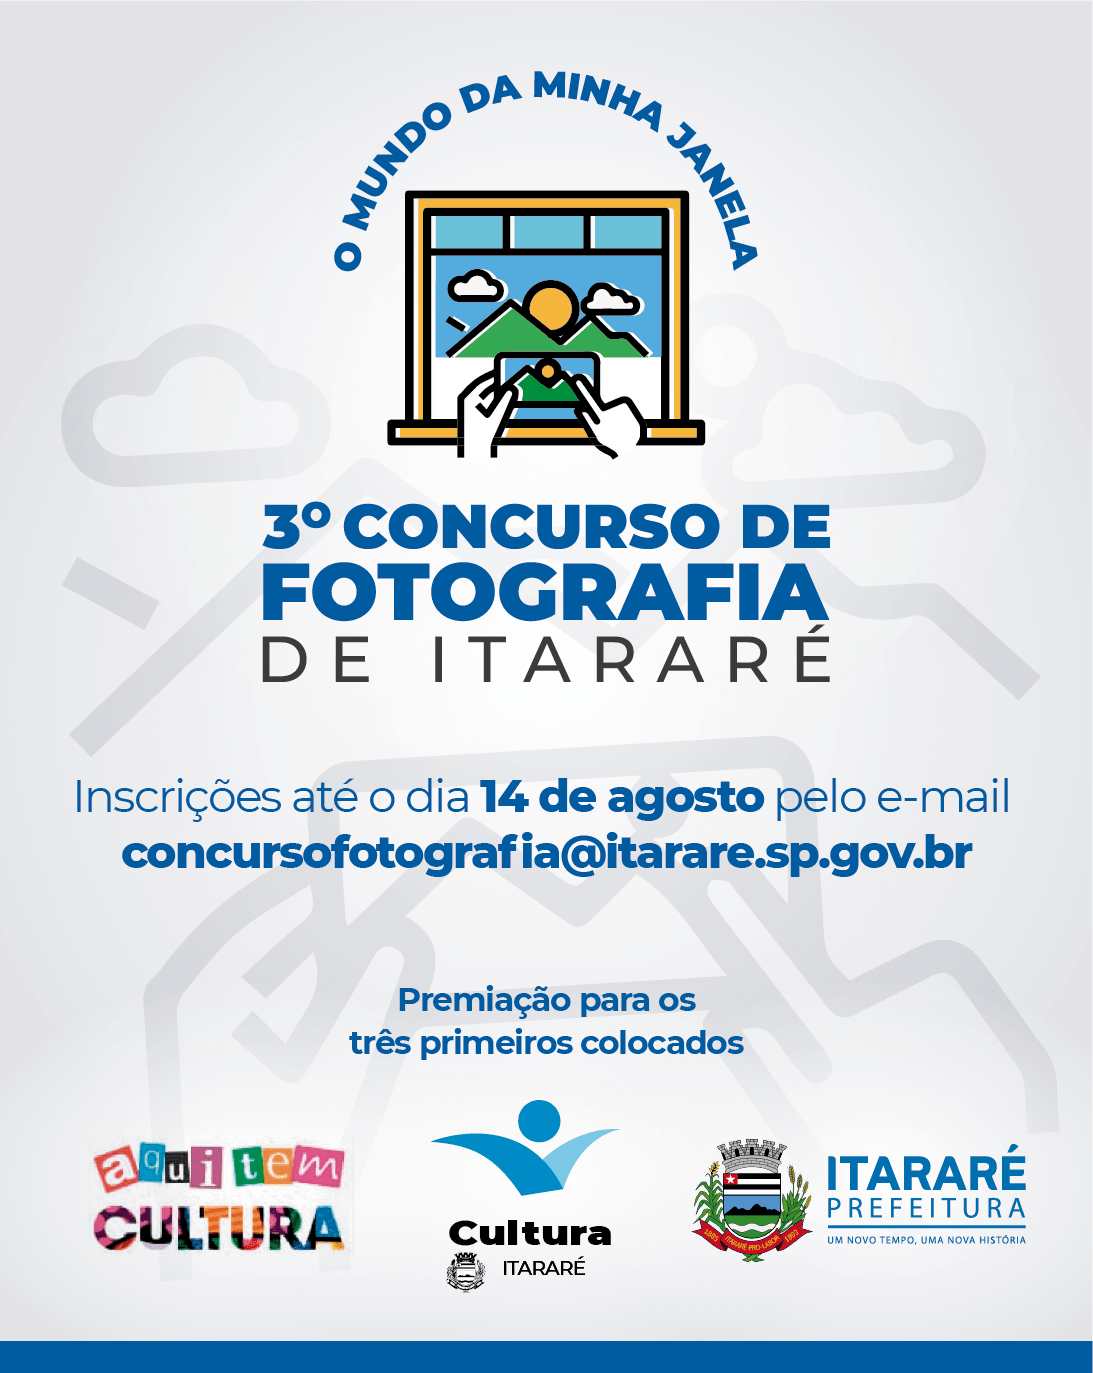 Prefeitura de Itararé (SP) promove 3º Concurso de Fotografia